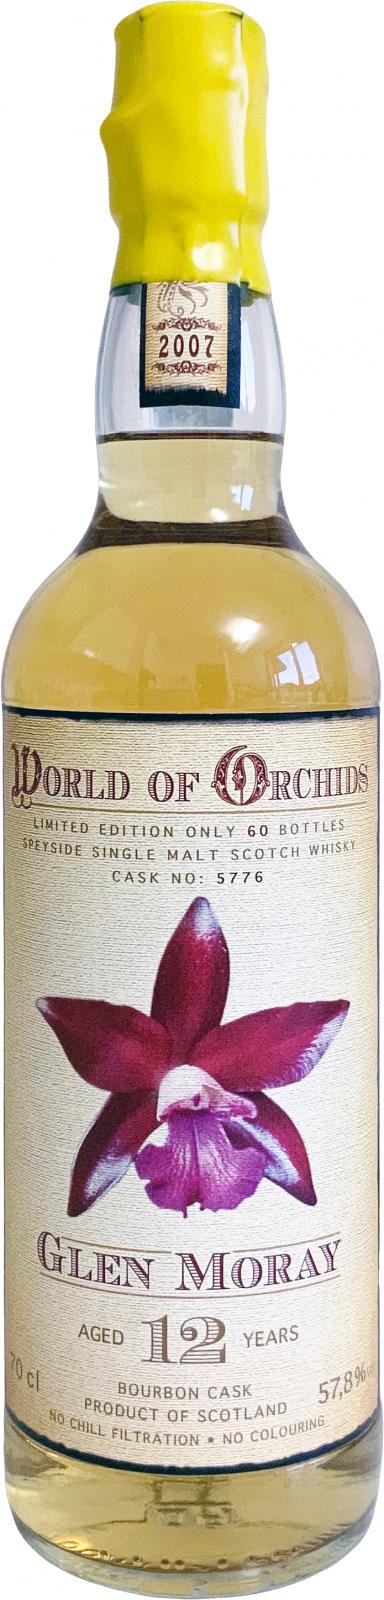 Glen Moray 2007 JW World of Orchids Bourbon Cask #5776 Hauptstross 100 57.8% 700ml